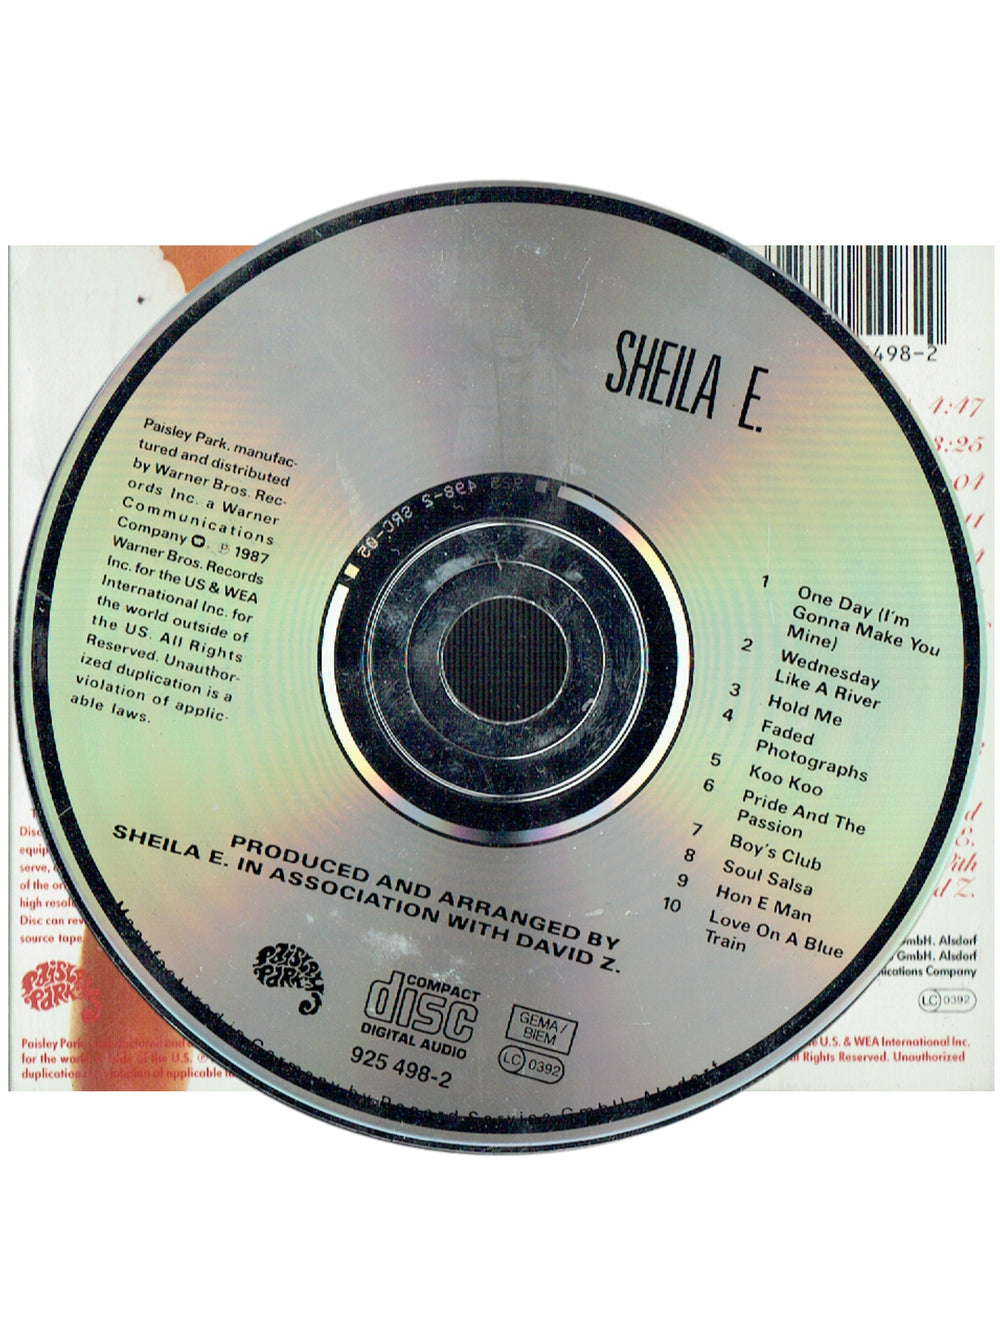 Prince – Sheila E Self Titled CD Album 1987 Release UK EU Paisley Park Prince